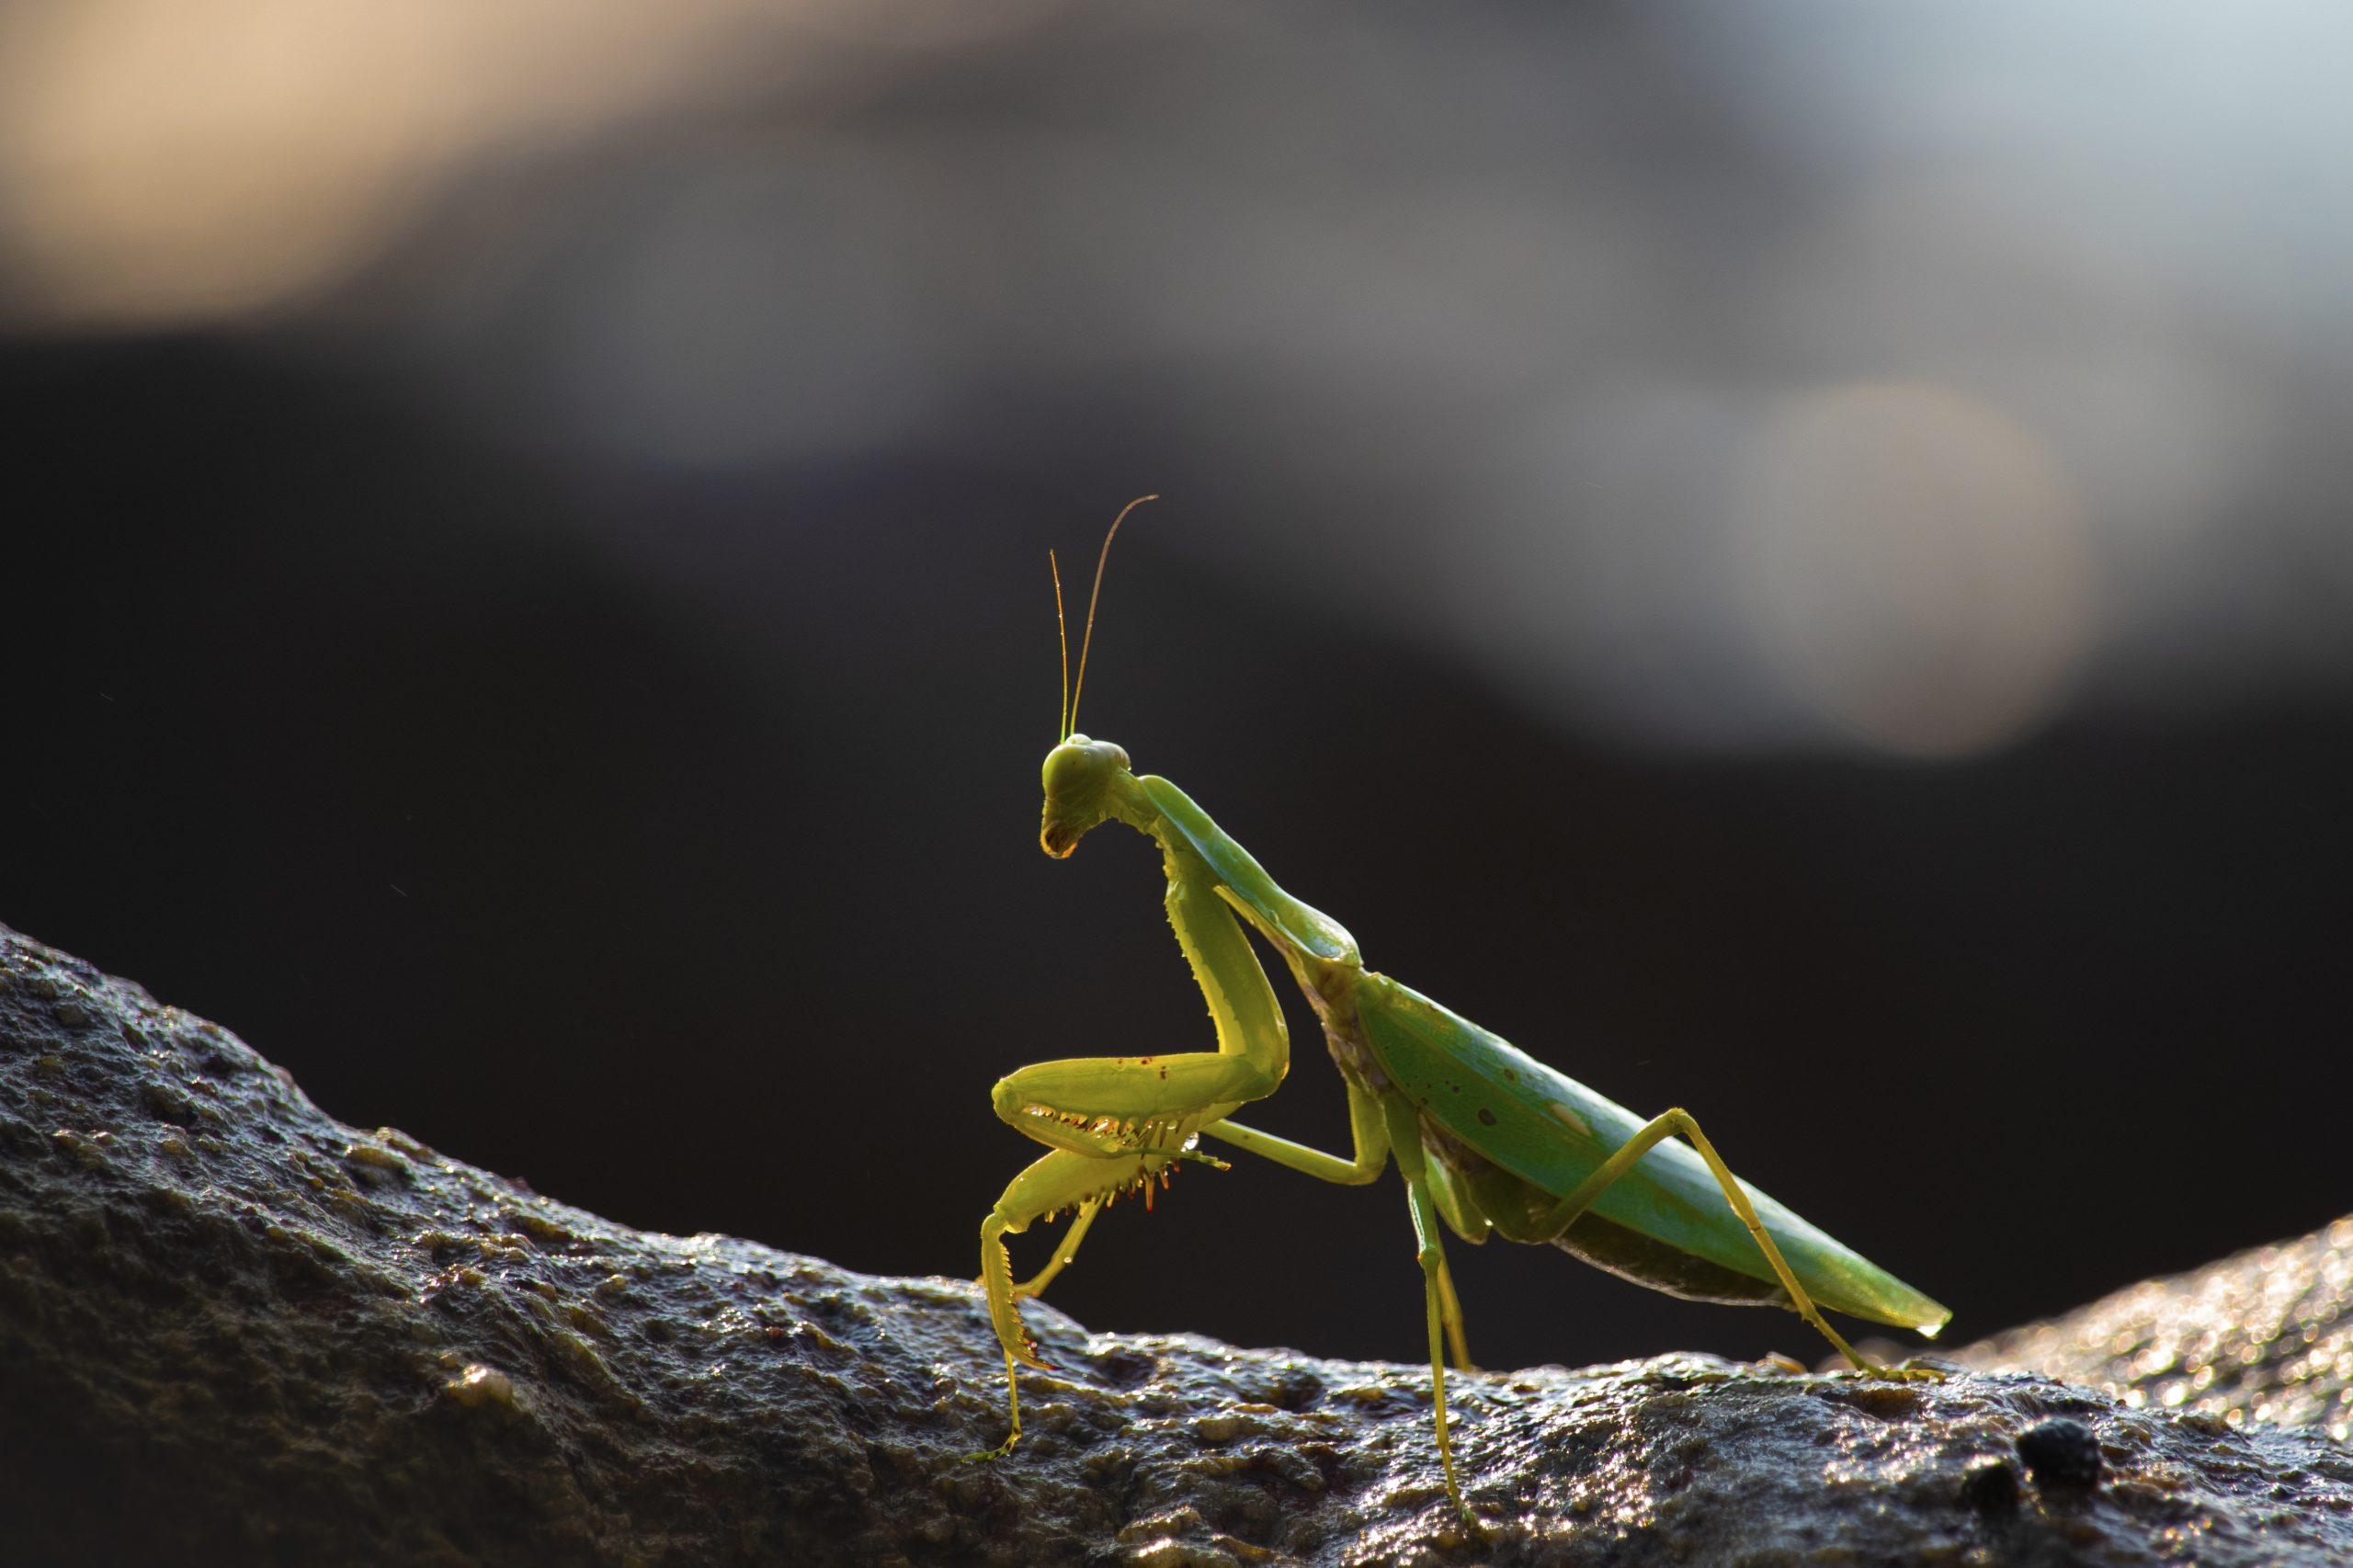 The posing green mantis